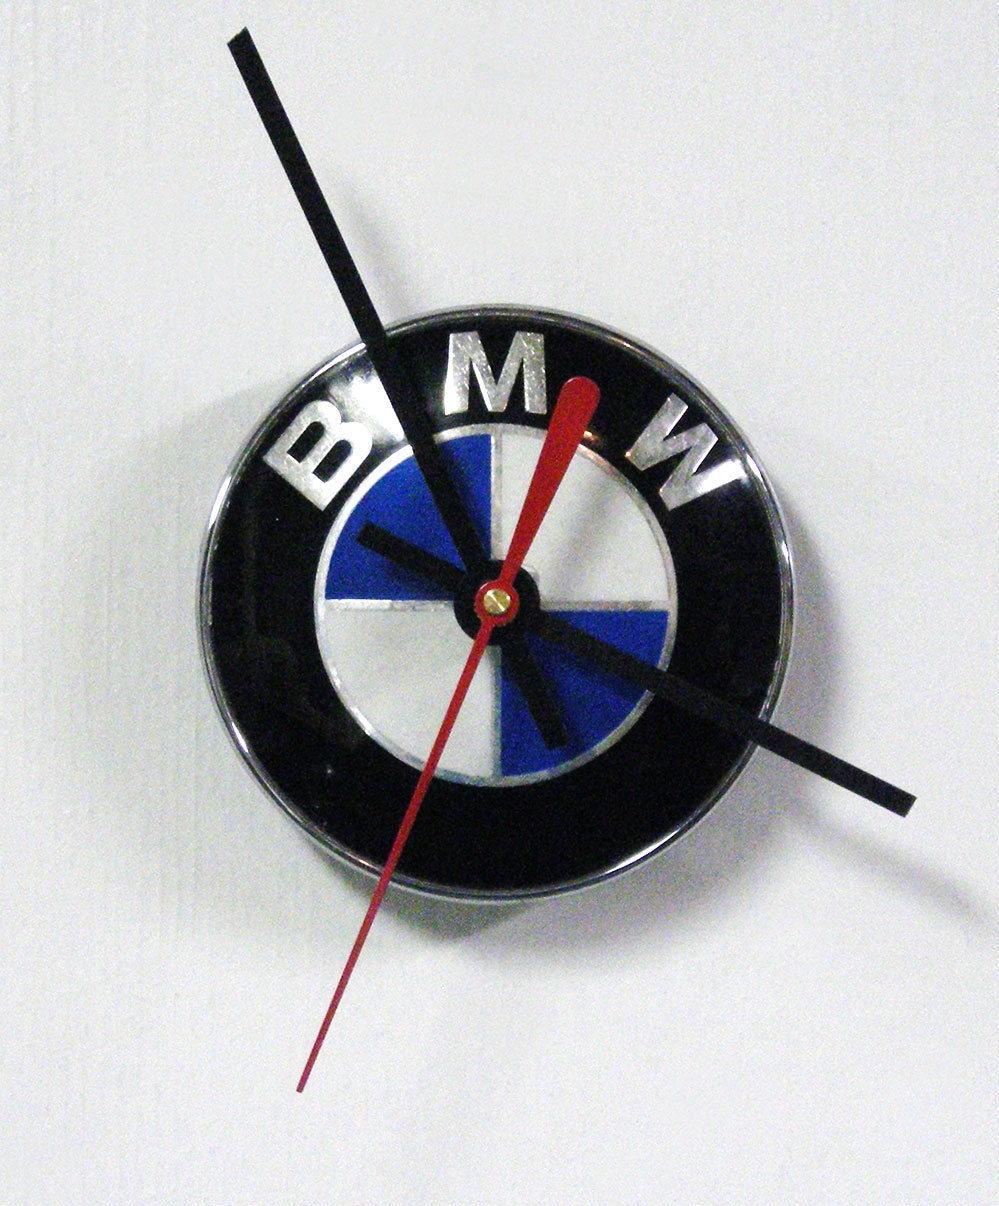 Bmw wall clock #1